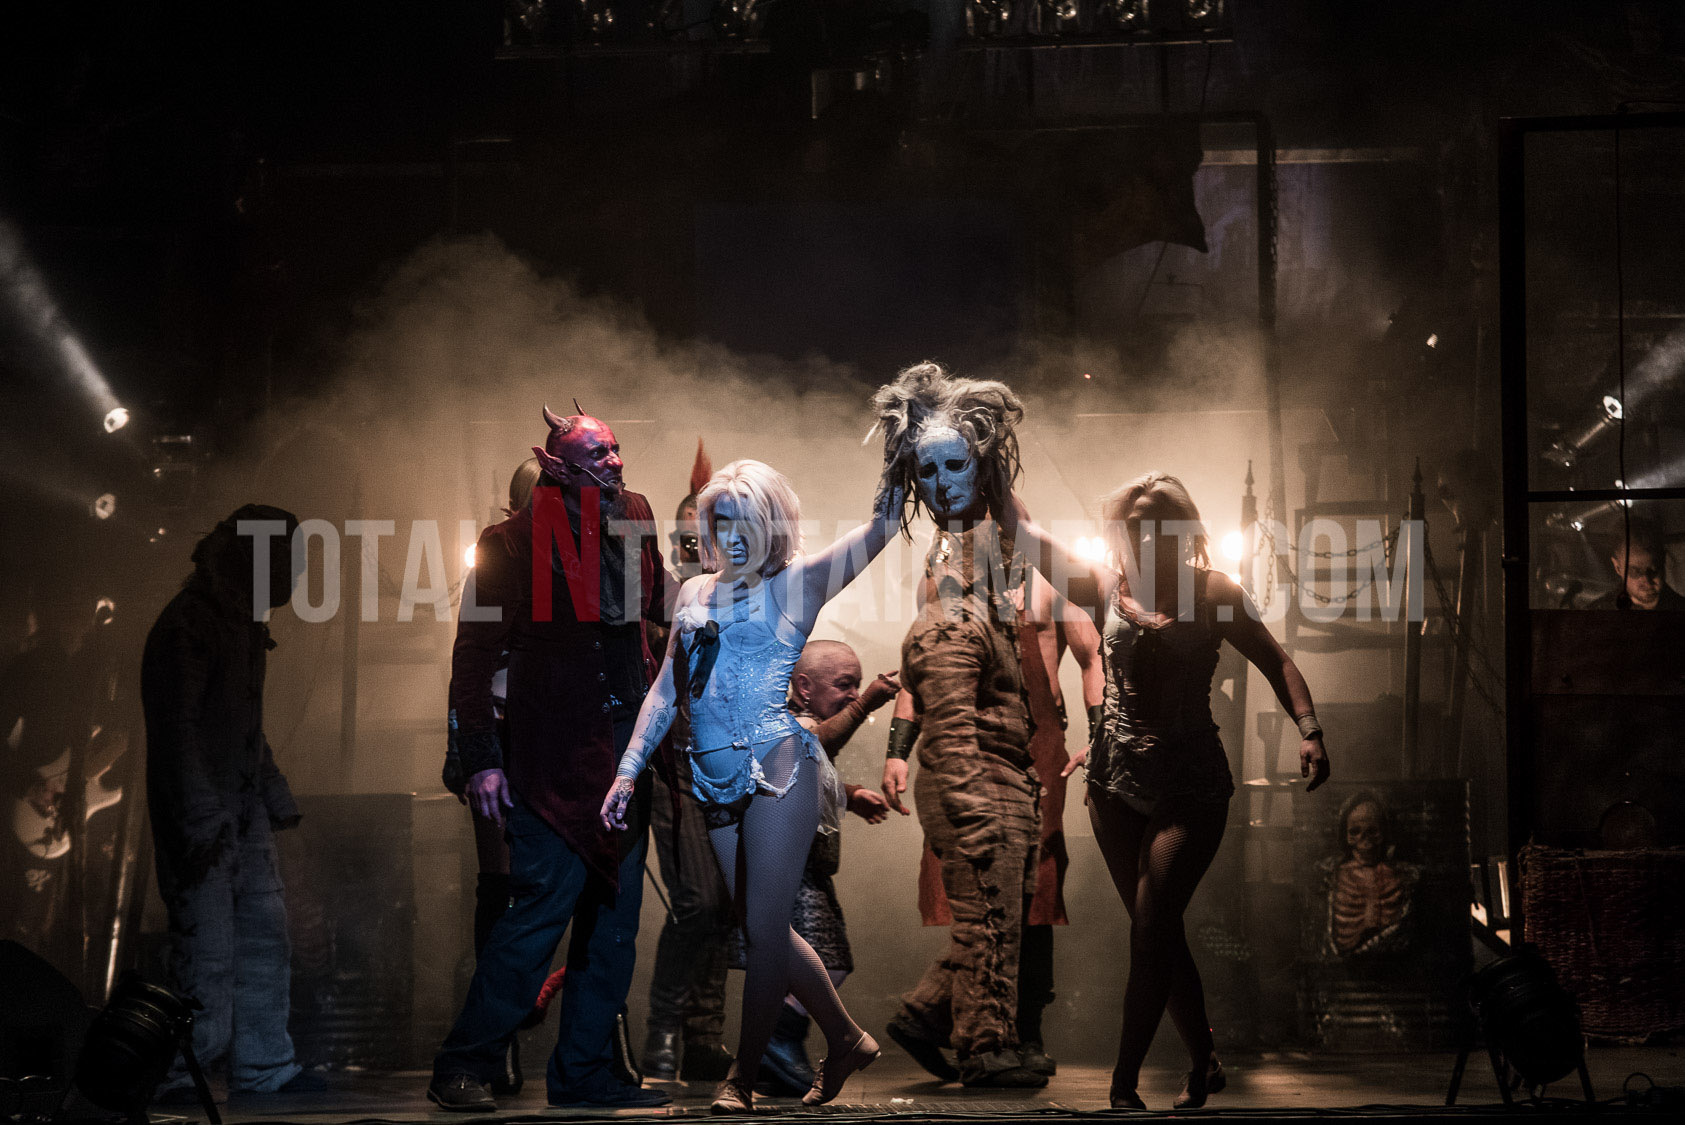 Circus of Horrors, Voodoo, York, Theatre, totalntertainment